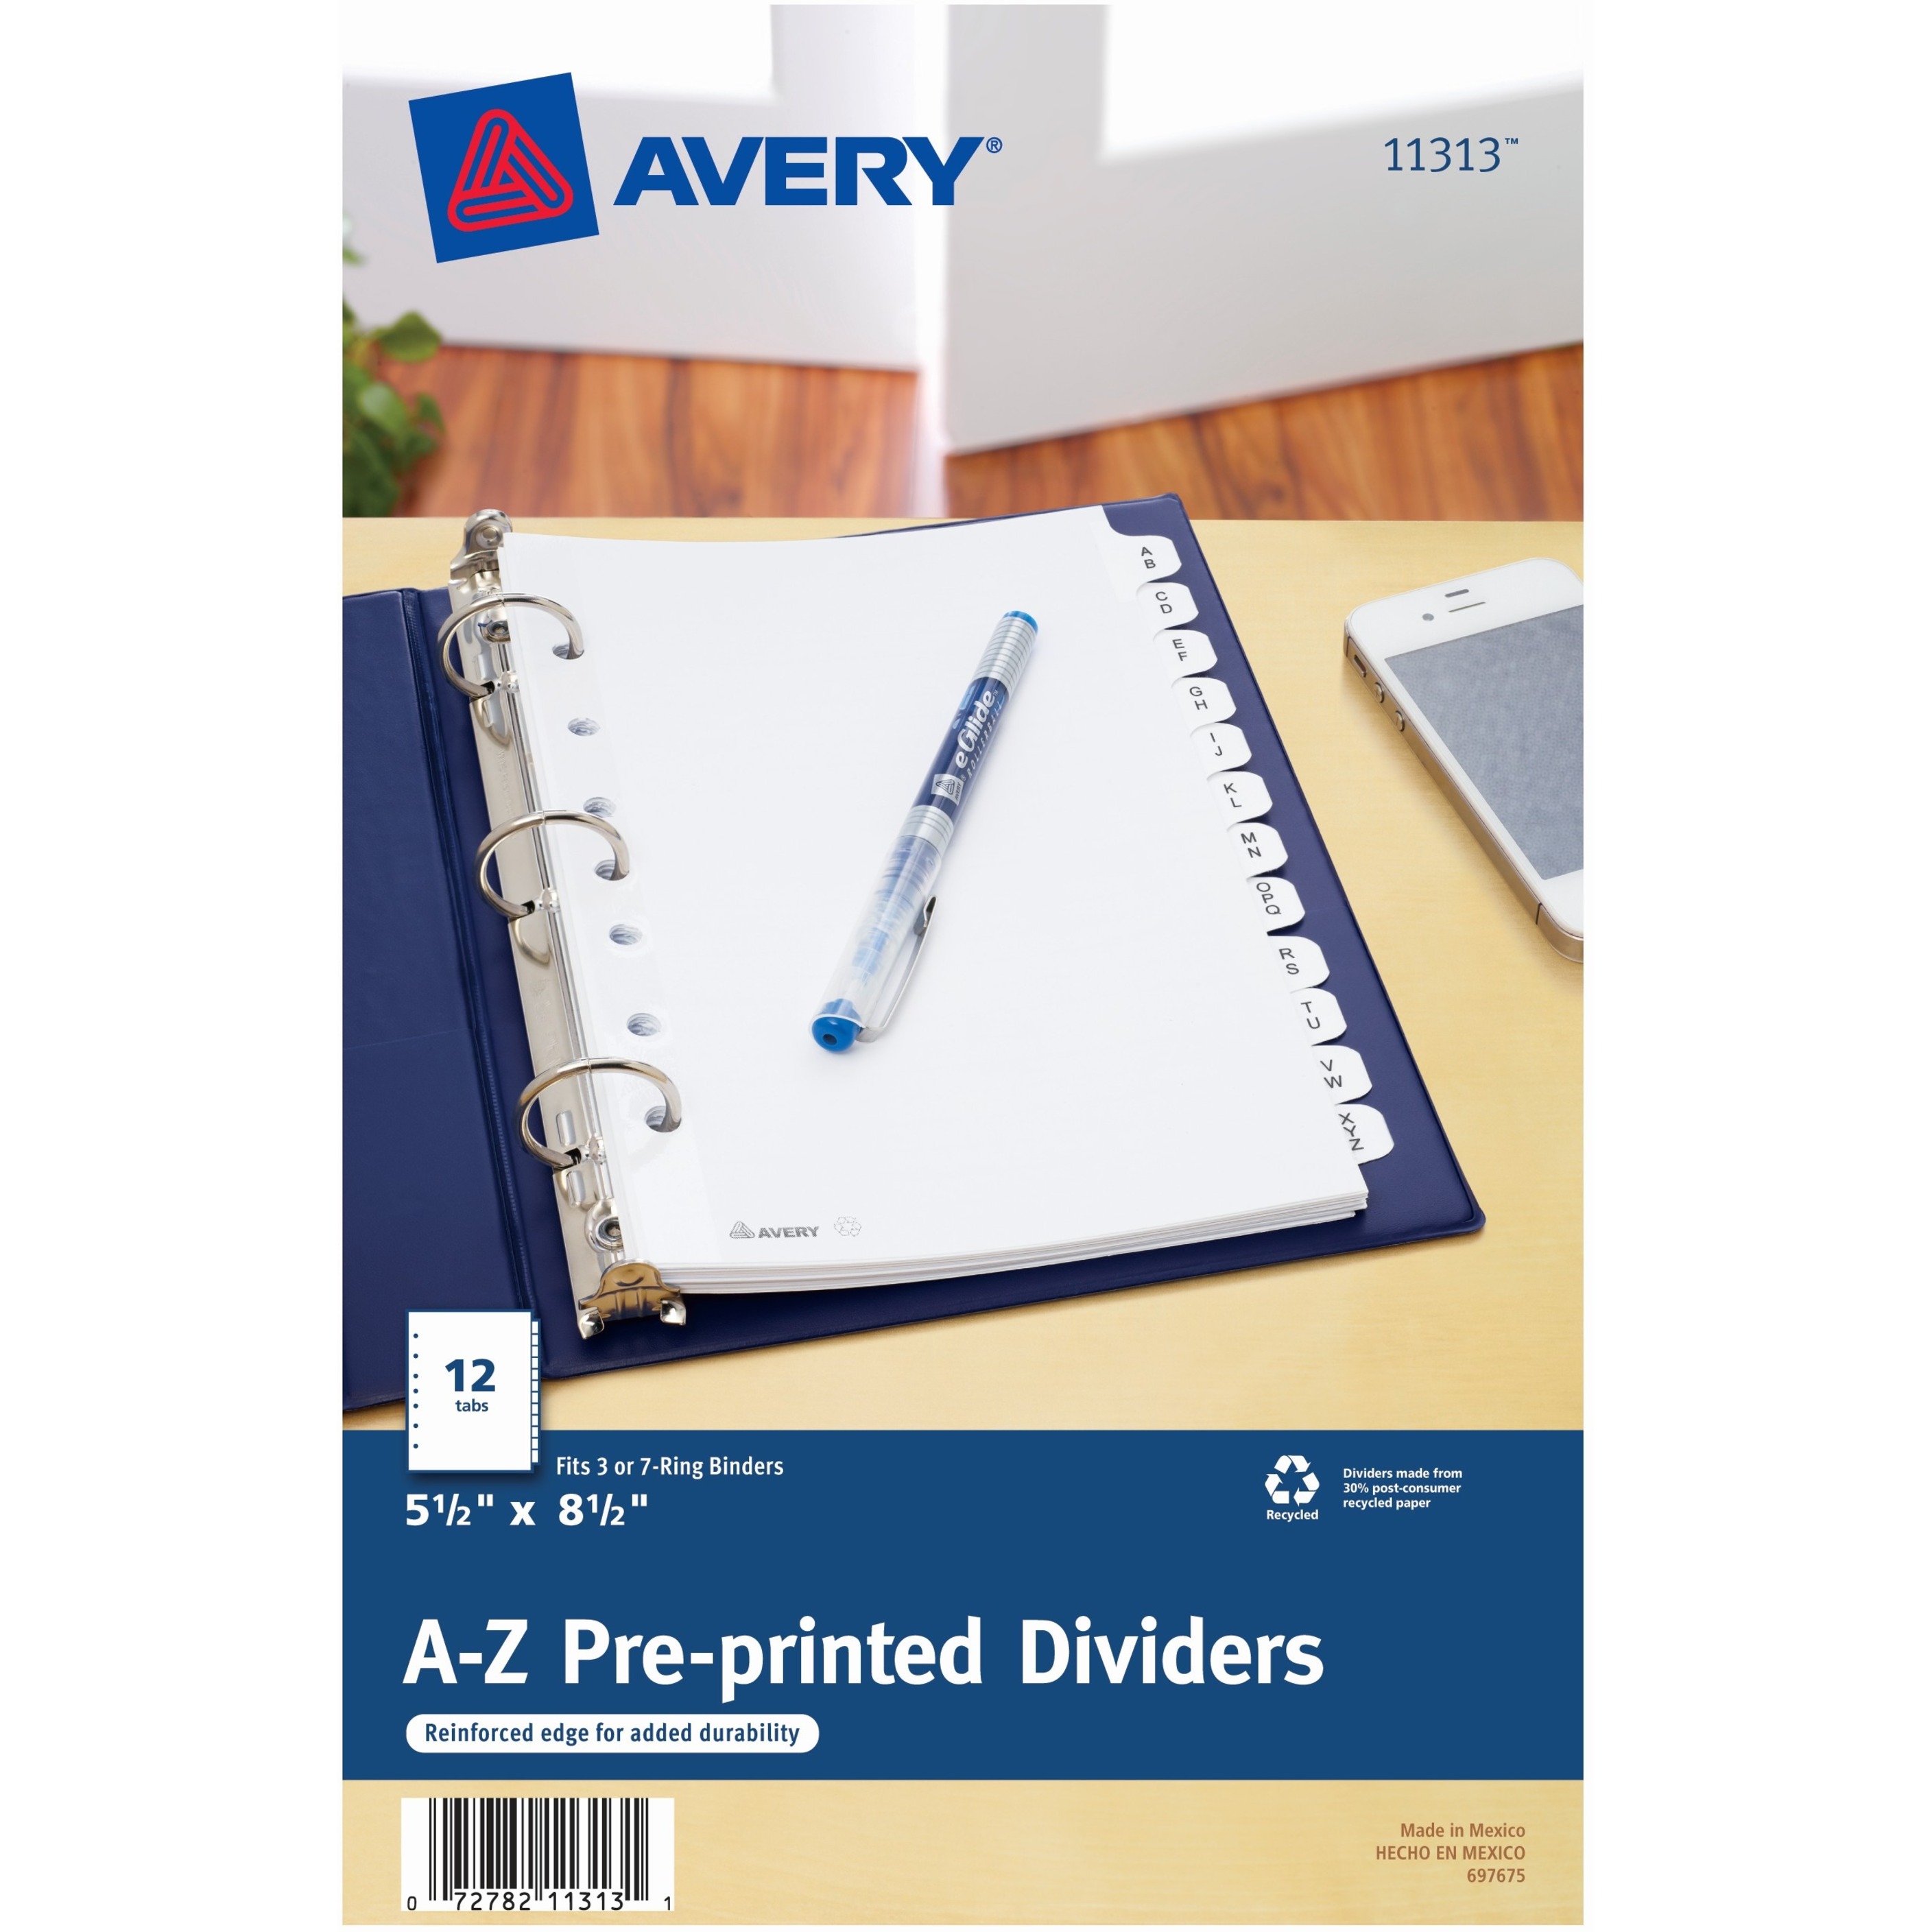 Avery "A-Z" Dividers, 8.5" x 5.5", 1 Binder Divider Set (11313) - image 1 of 5